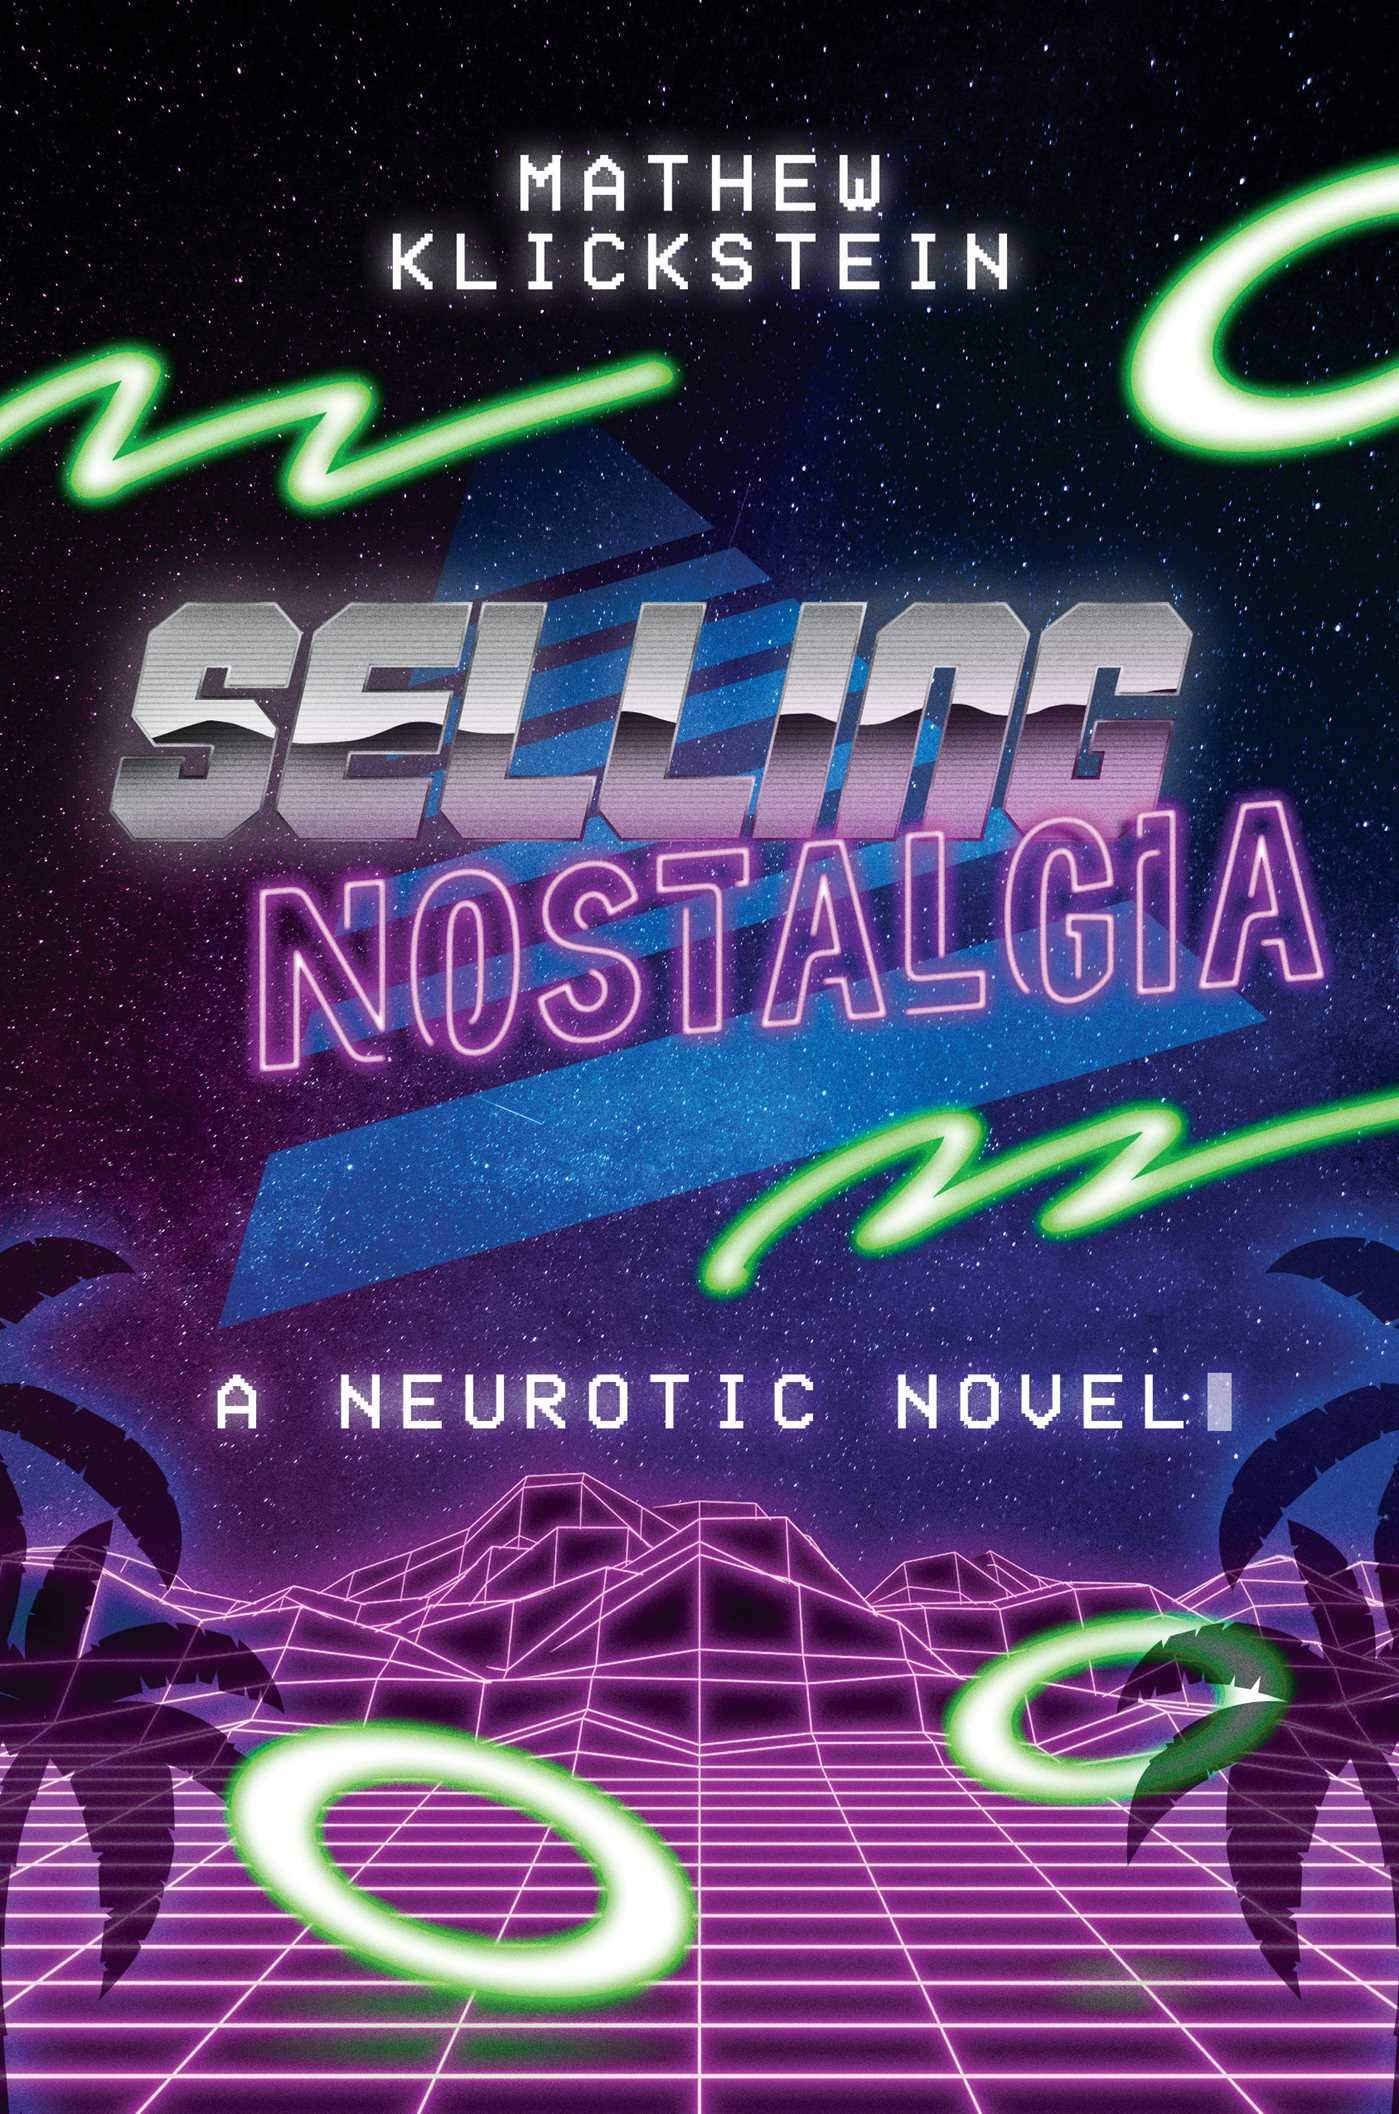 Selling Nostalgia: A Neurotic Novel